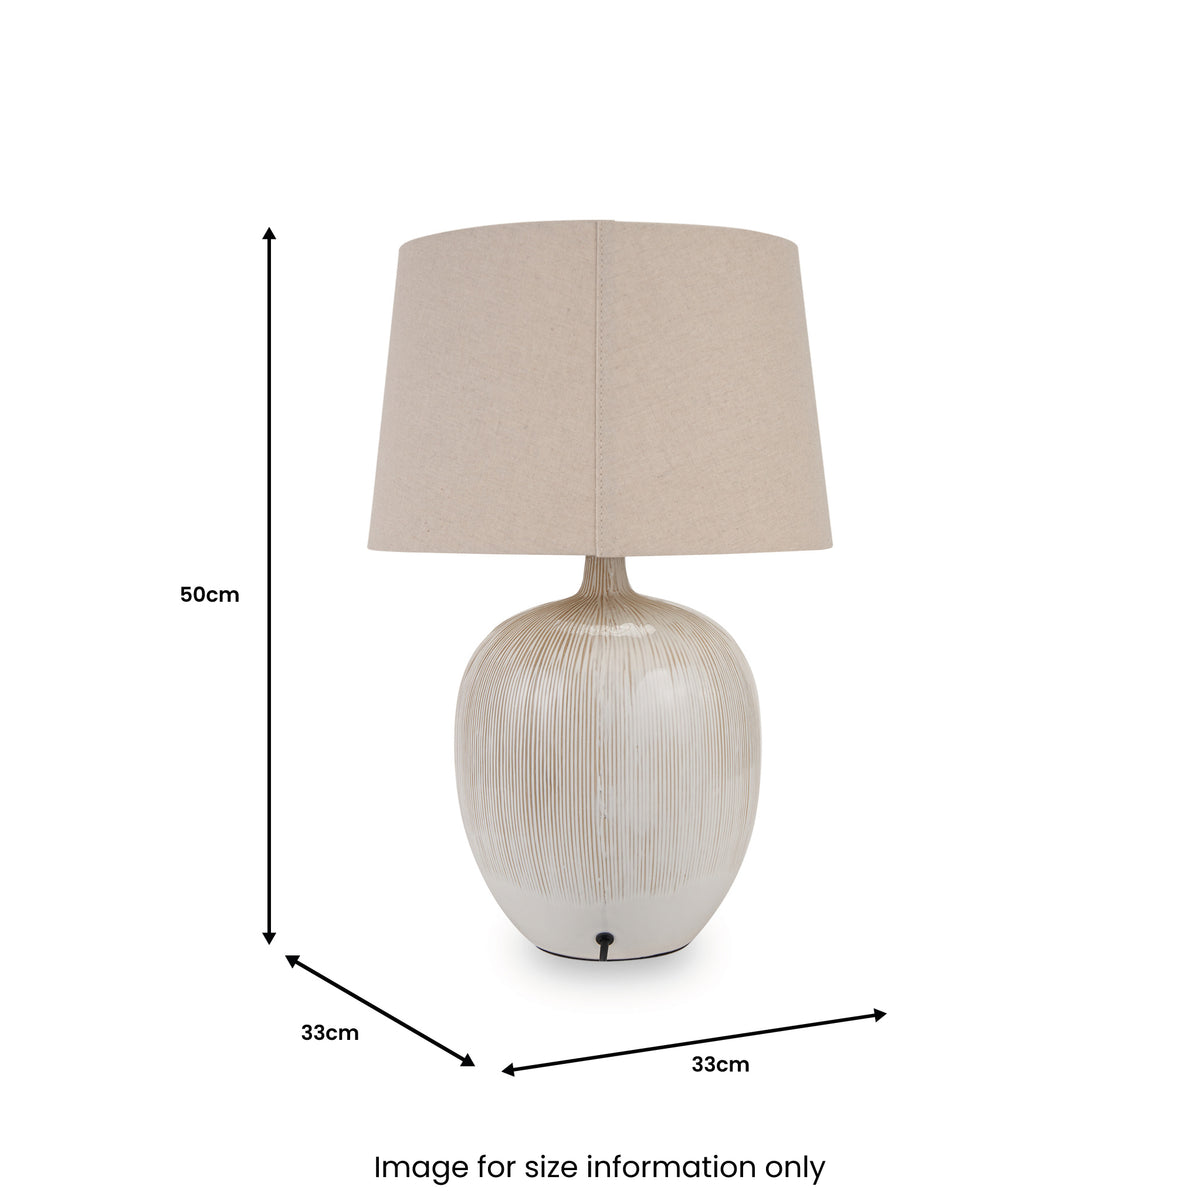 Greta Natural and Cream Textured Ceramic Table Lamp